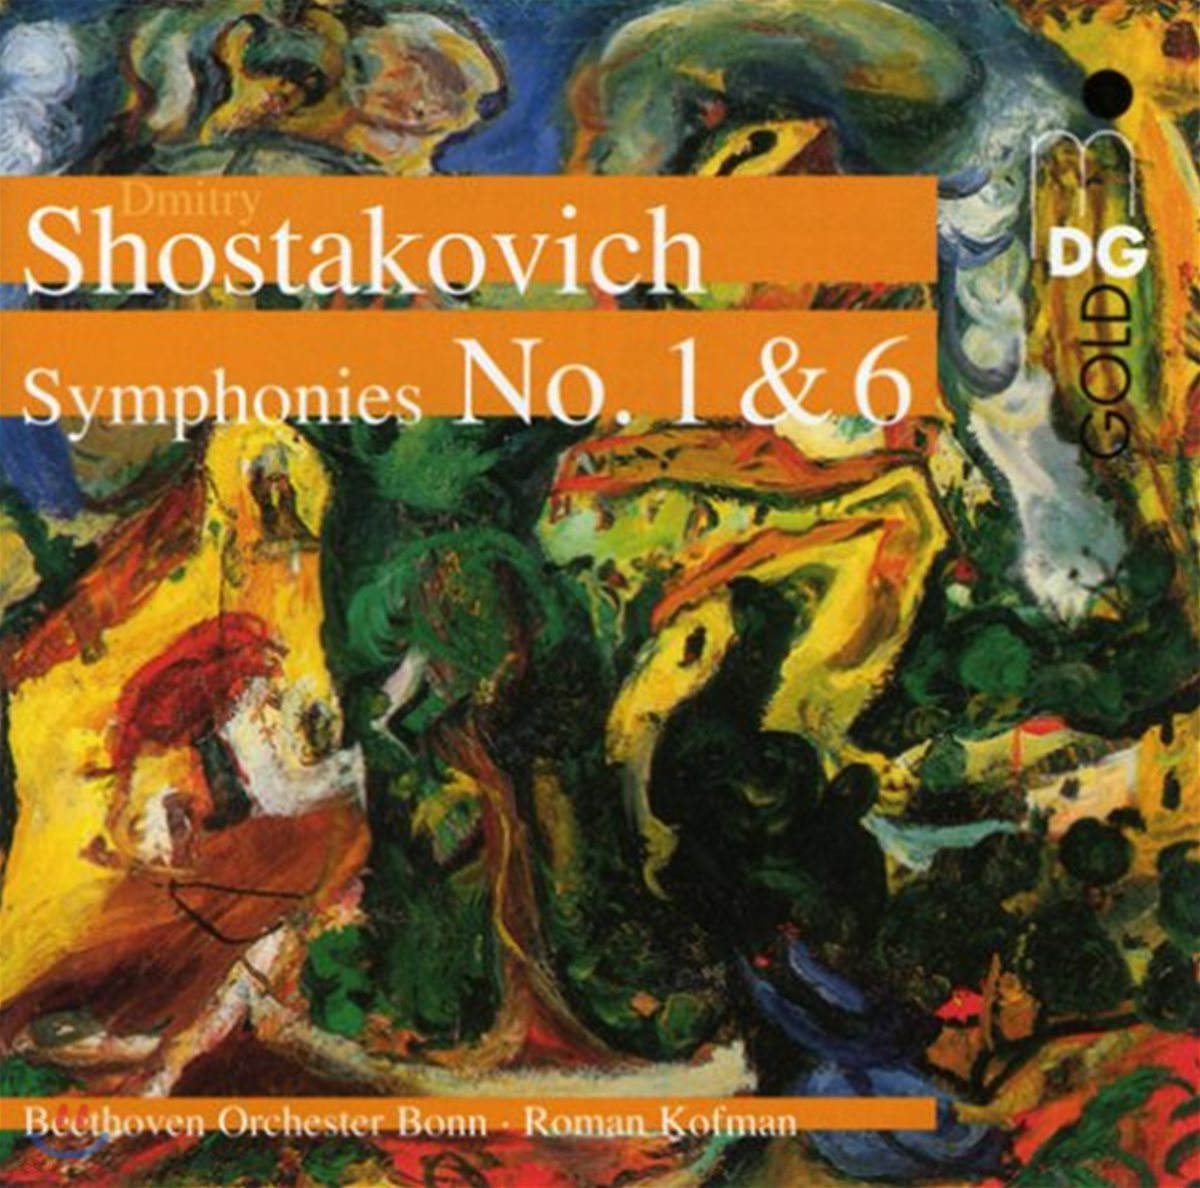 Roman Kofman 쇼스타코비치: 교향곡 1, 6번 (Shostakovich: Symphonies Nos. 1 & 6)